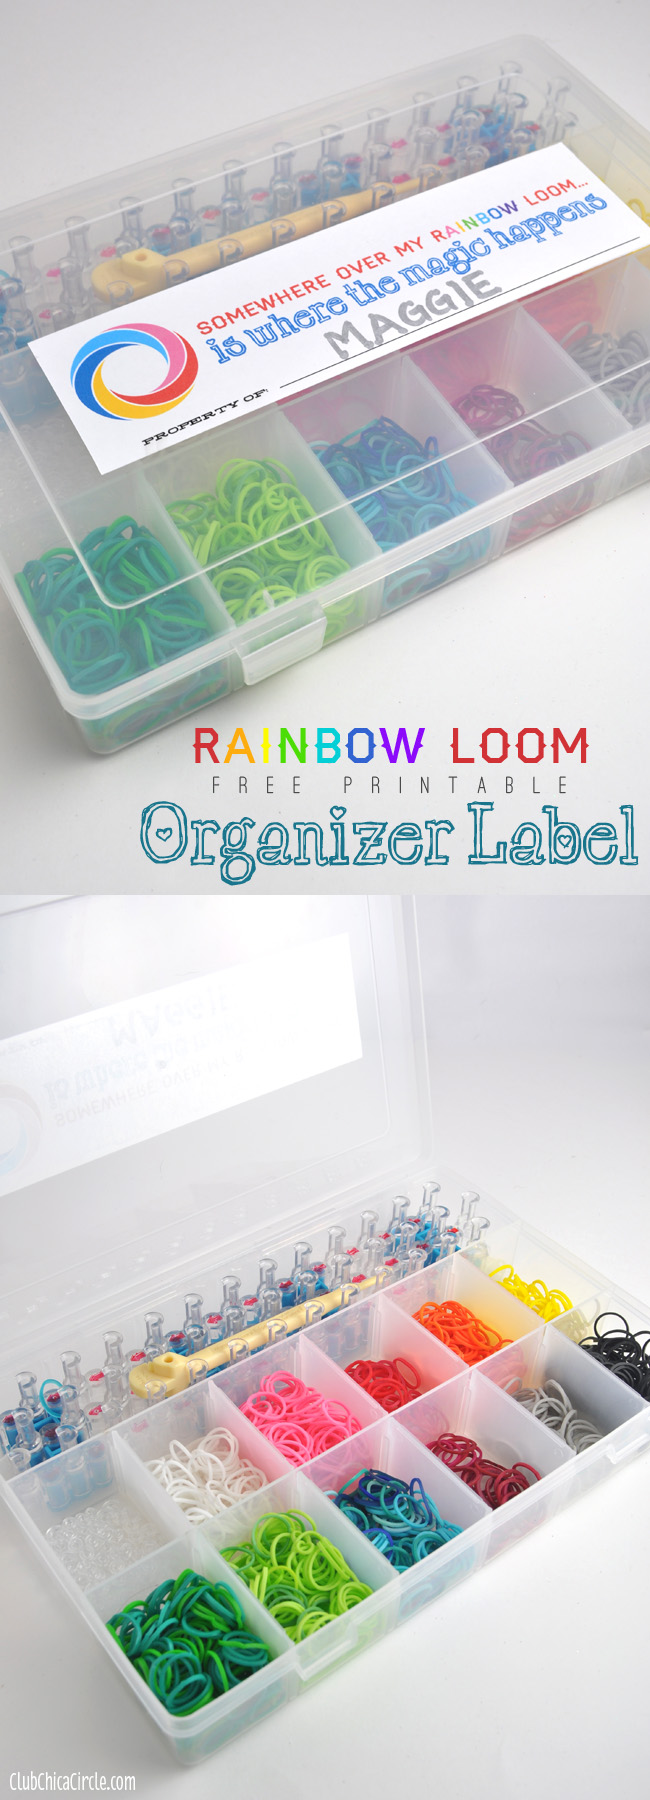 Somewhere over the Rainbow Loom Organizer free printable label